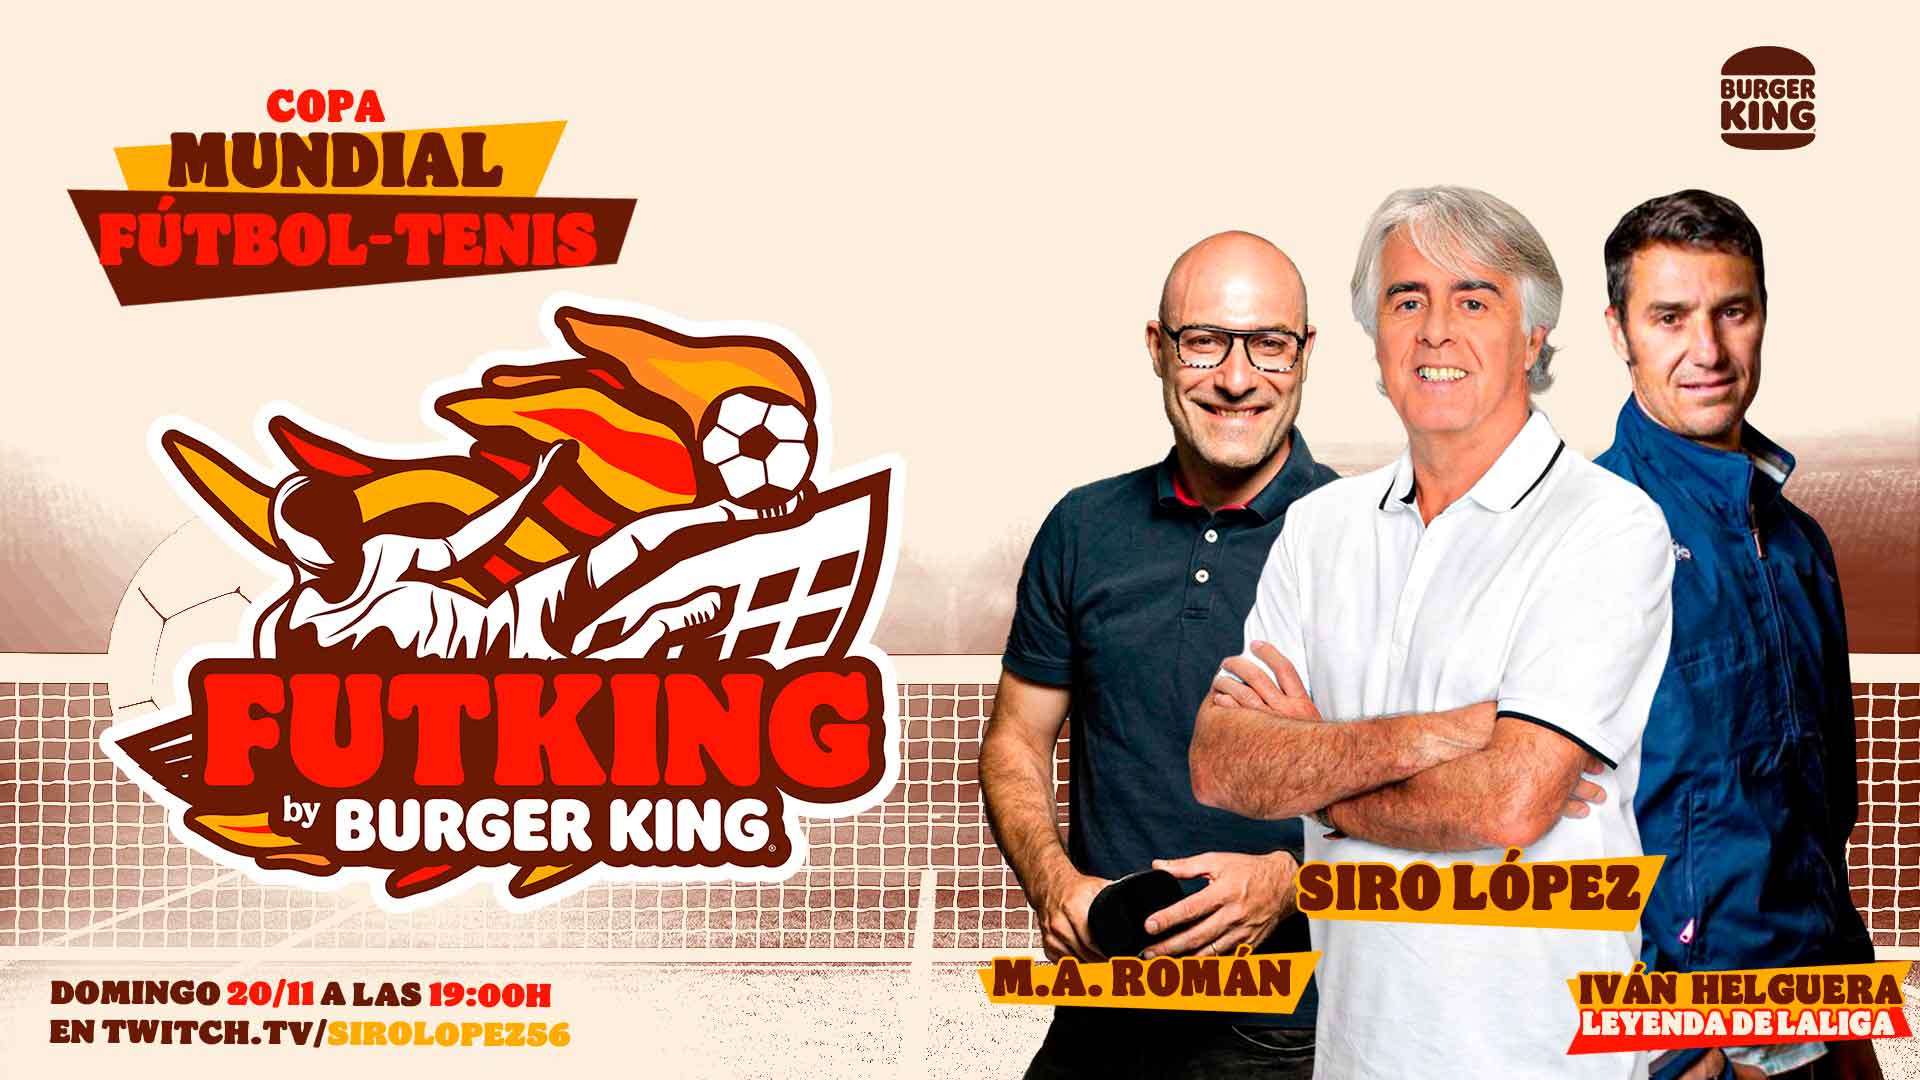 Burger King, retransmite el fútbol-tenis